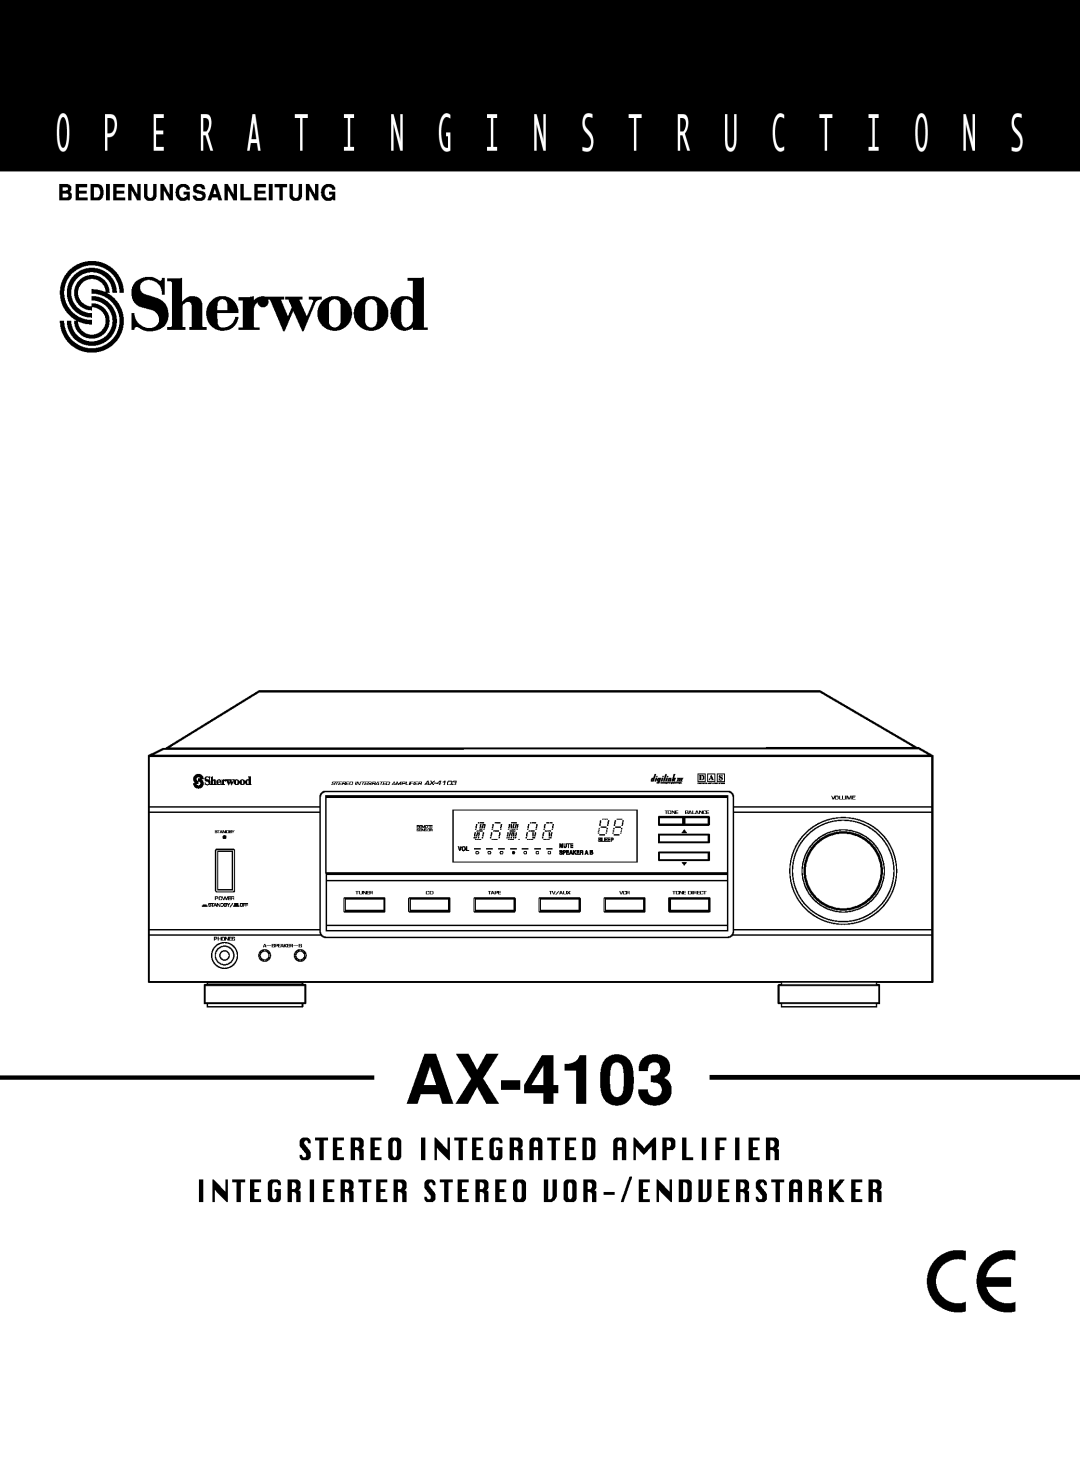 Sherwood AX-4103 operating instructions O P E R A T I N G I N S T R U C T I O N S, Bedienungsanleitung, D A S 